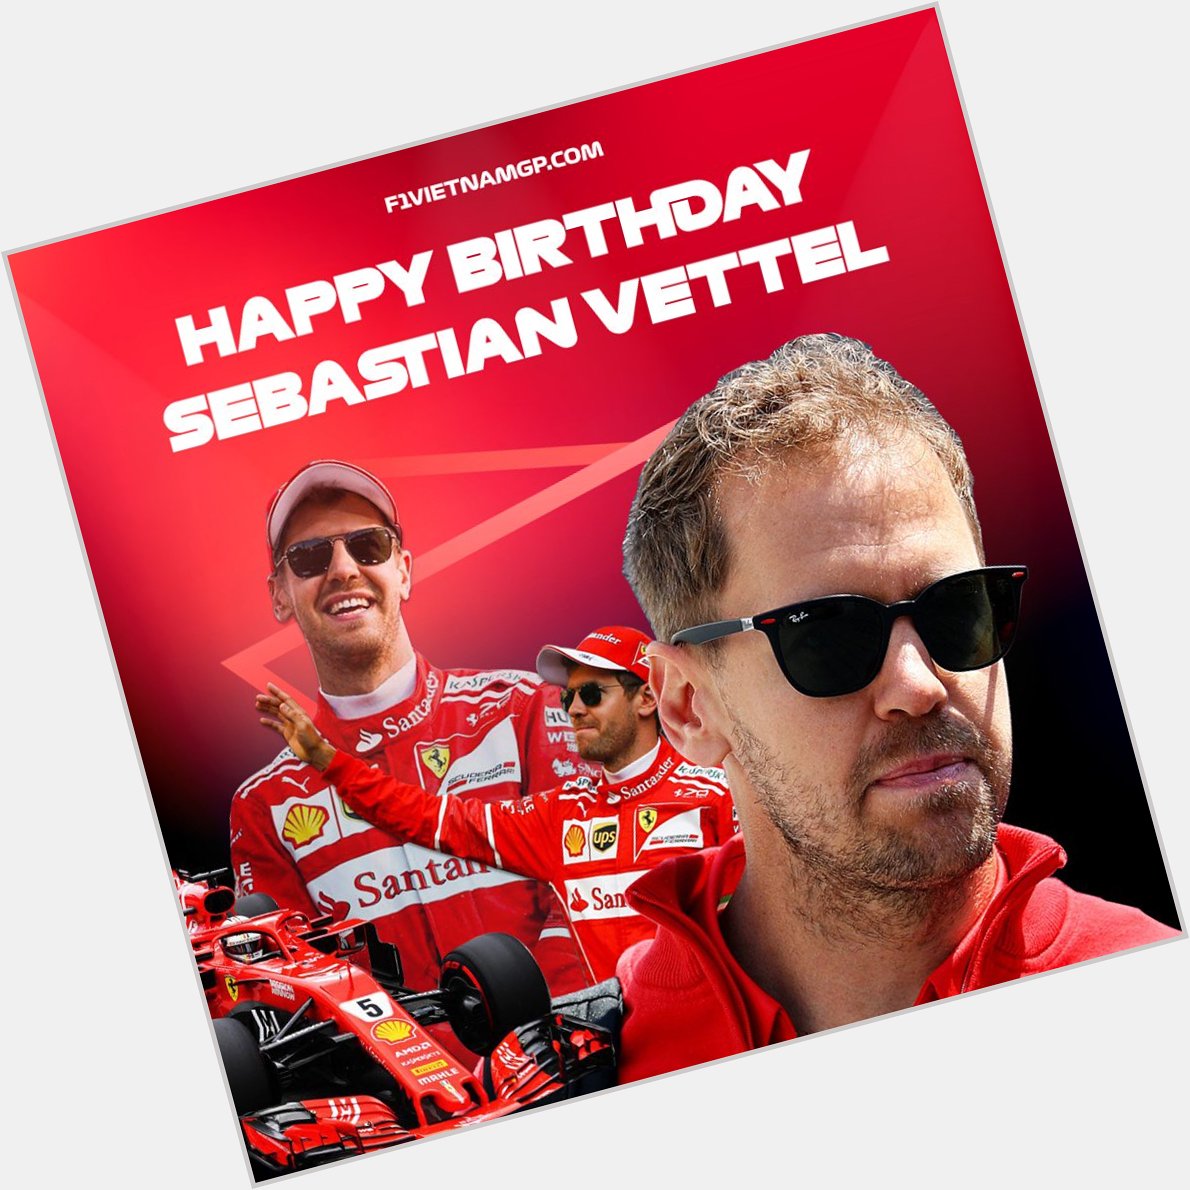  Happy birthday to Sebastian Vettel - four-time Formula One World Champion   